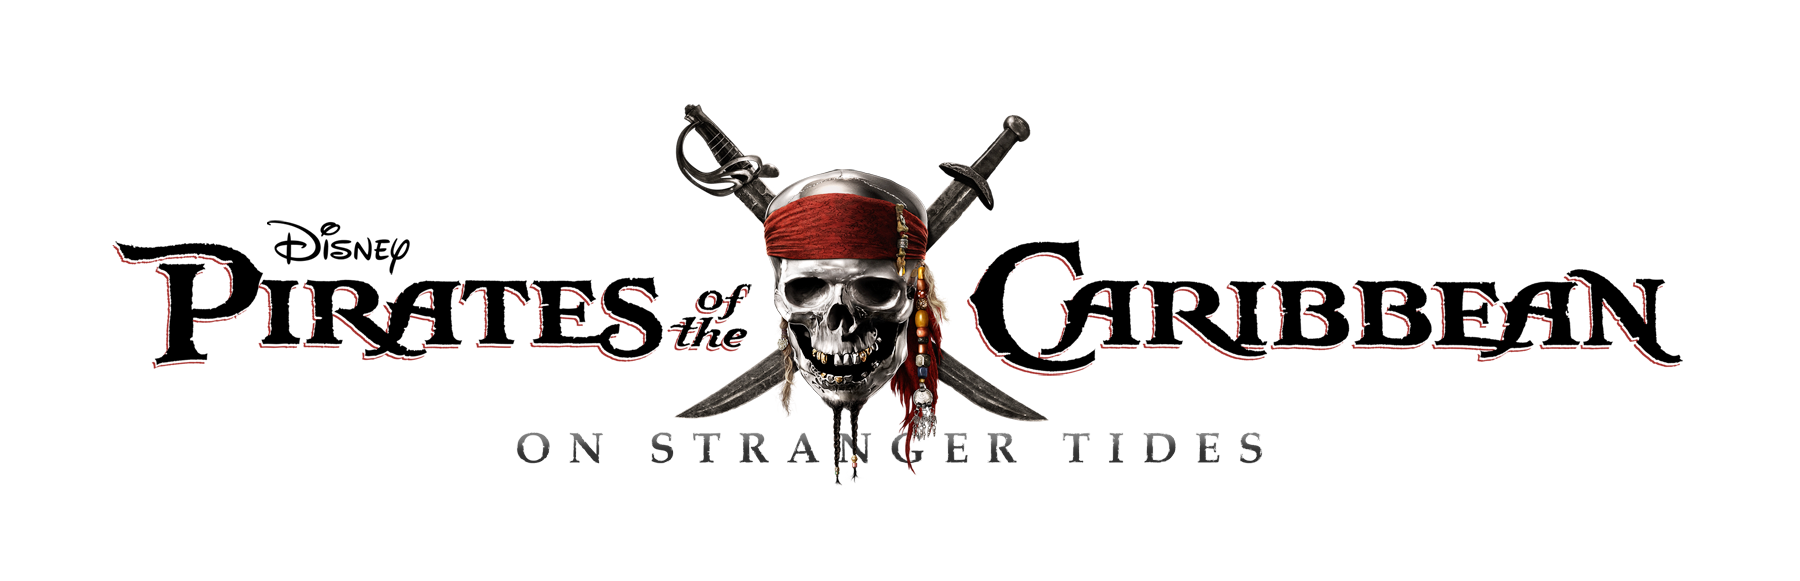 Пираты Карибского моря надпись. Пират. Пираты Карибского моря эмблема. Pirates of Caribbean логотип.